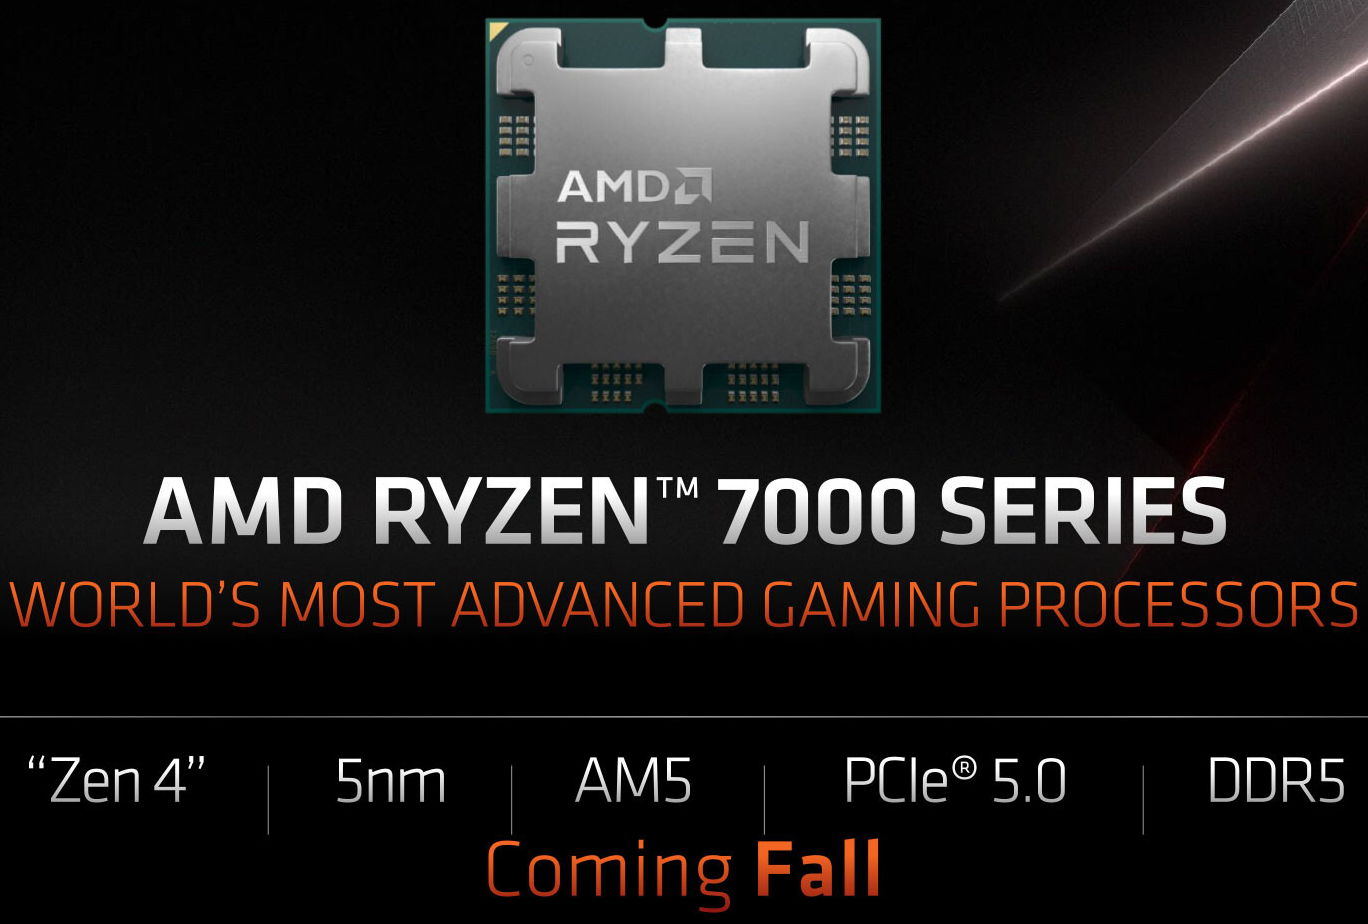 Presentación de AMD Ryzen 7000